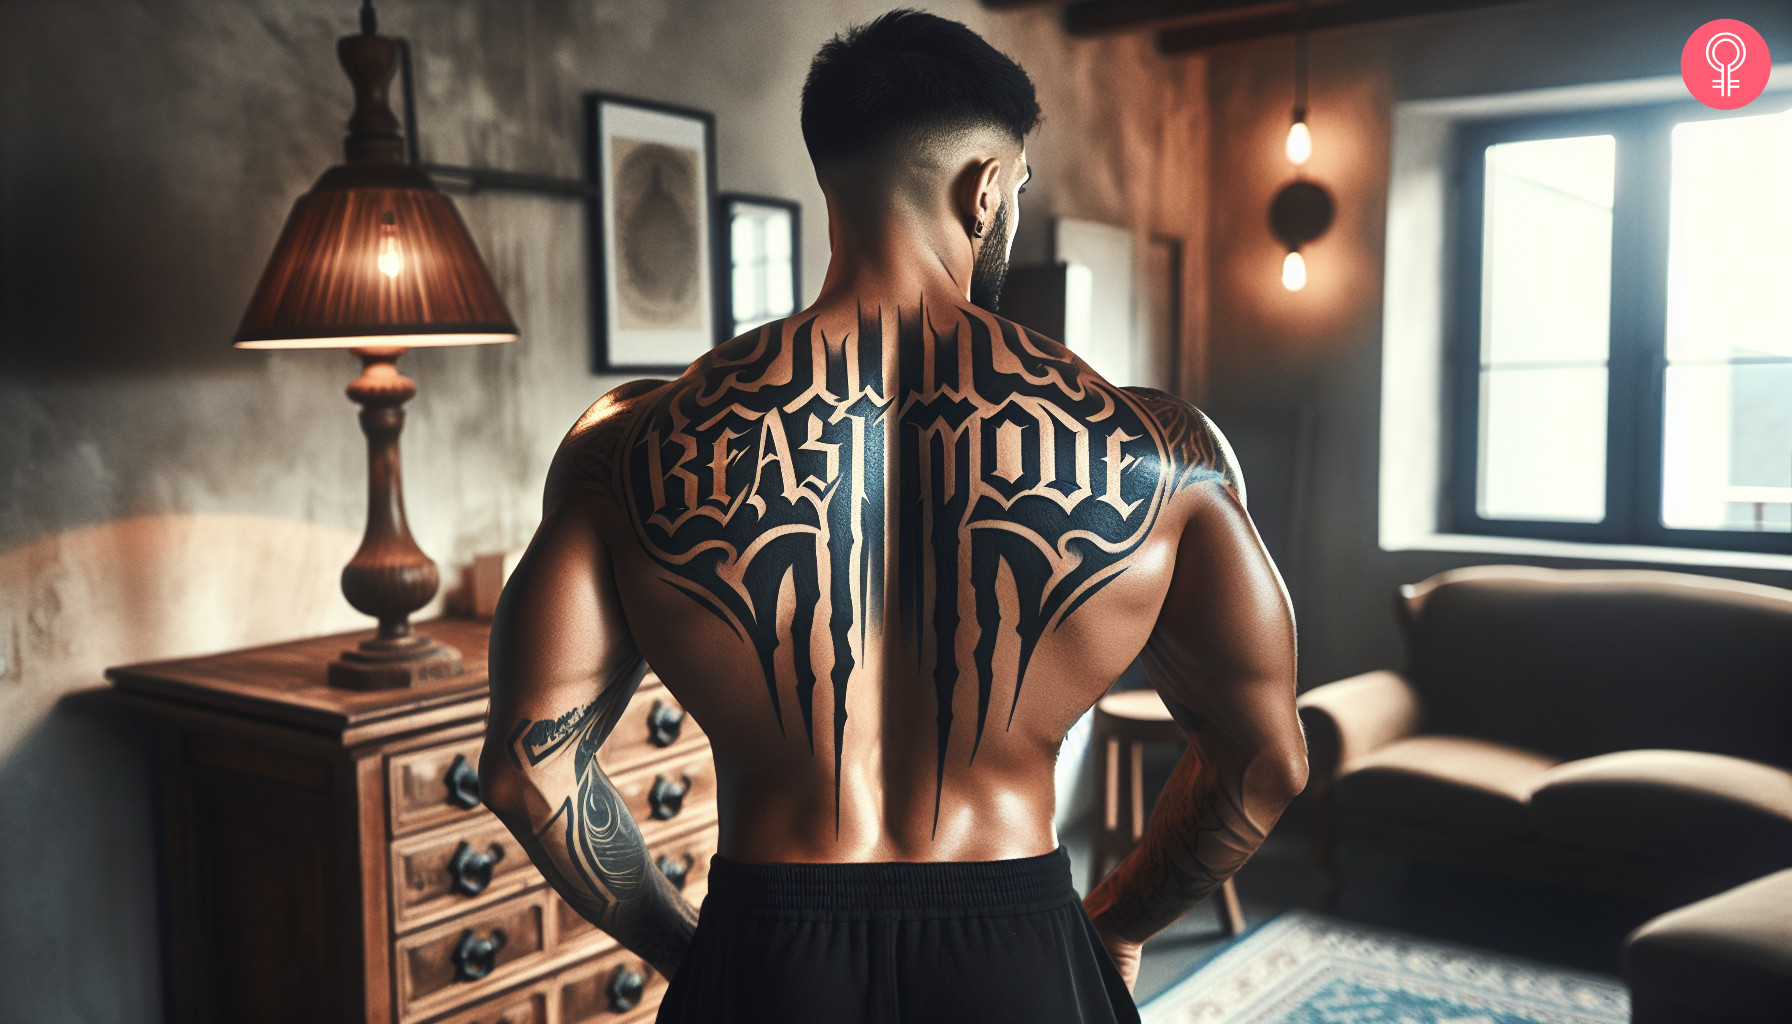 Beast mode’ tattoo on a man’s back